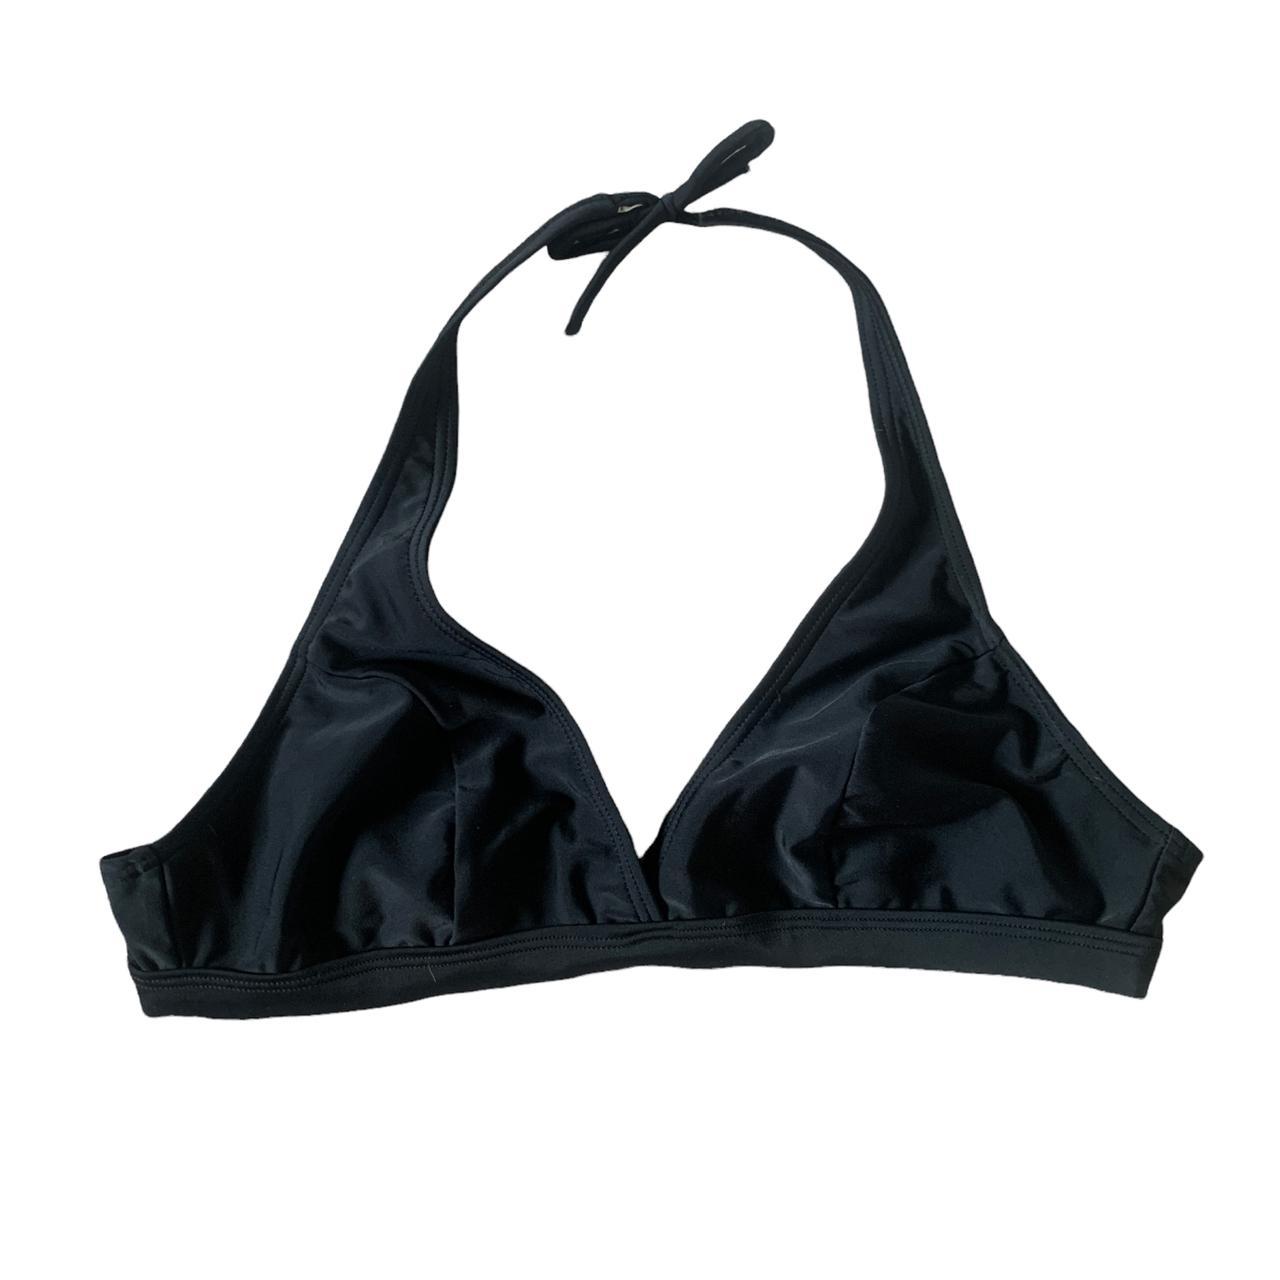 Gsus sindustries black bikini top💫 Bikini top from... - Depop